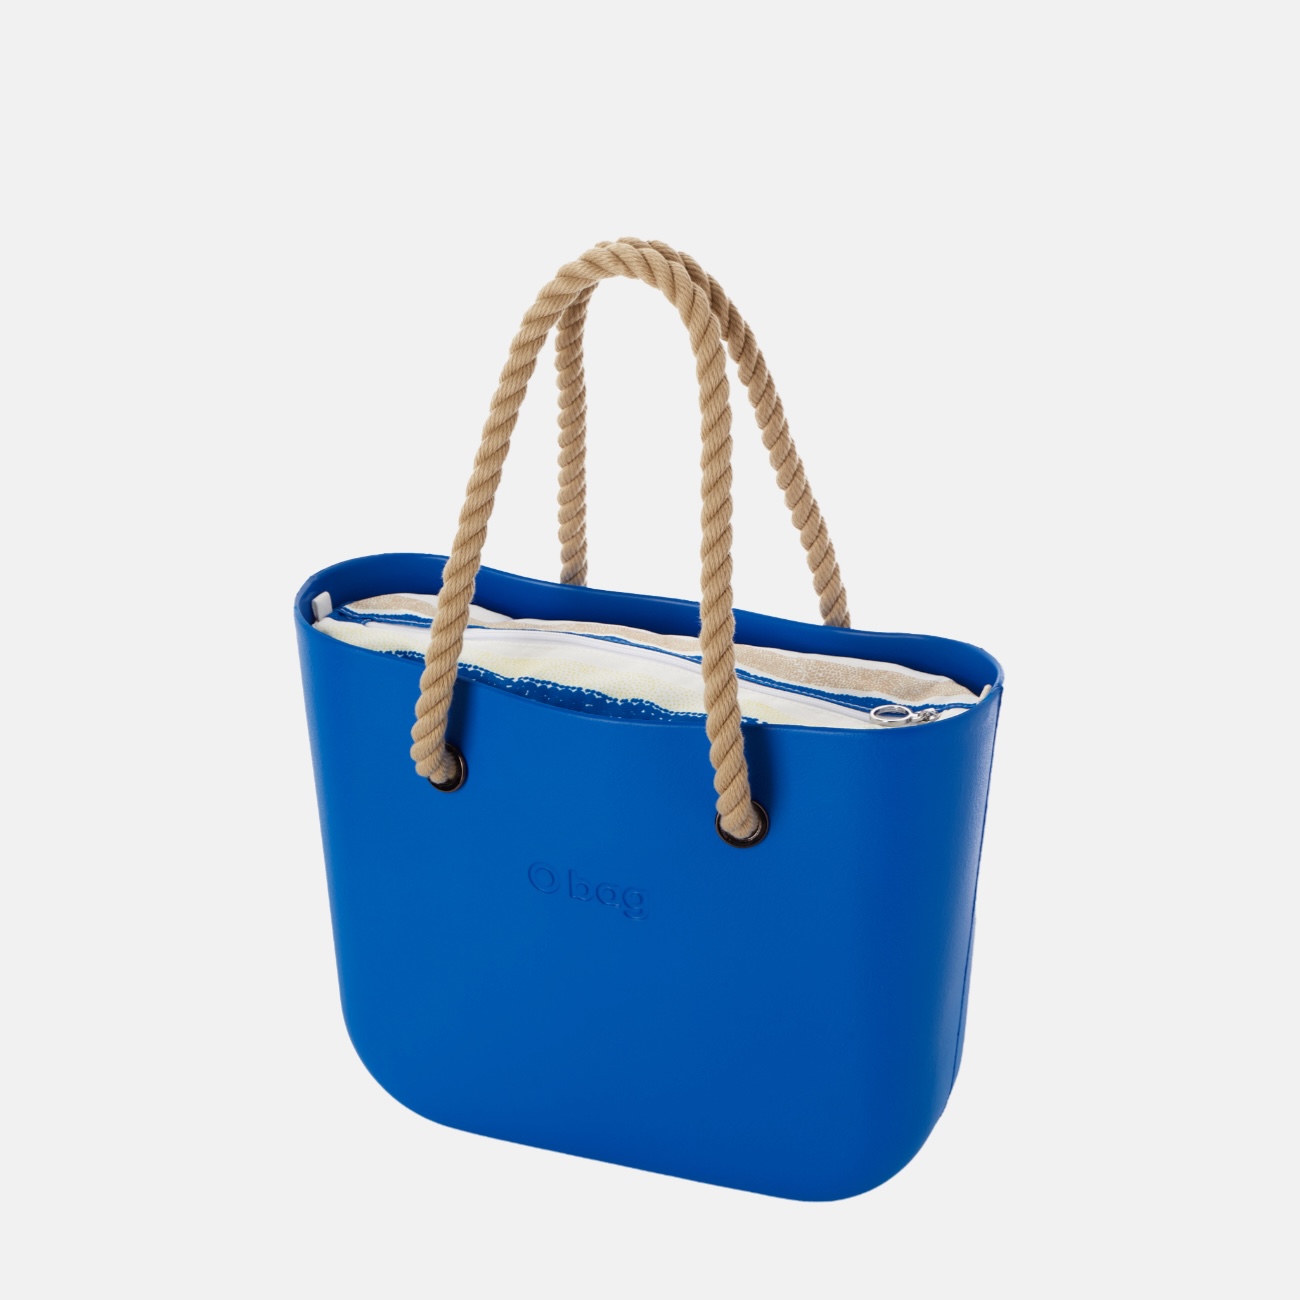 O bag deniz mavi tasarım çanta